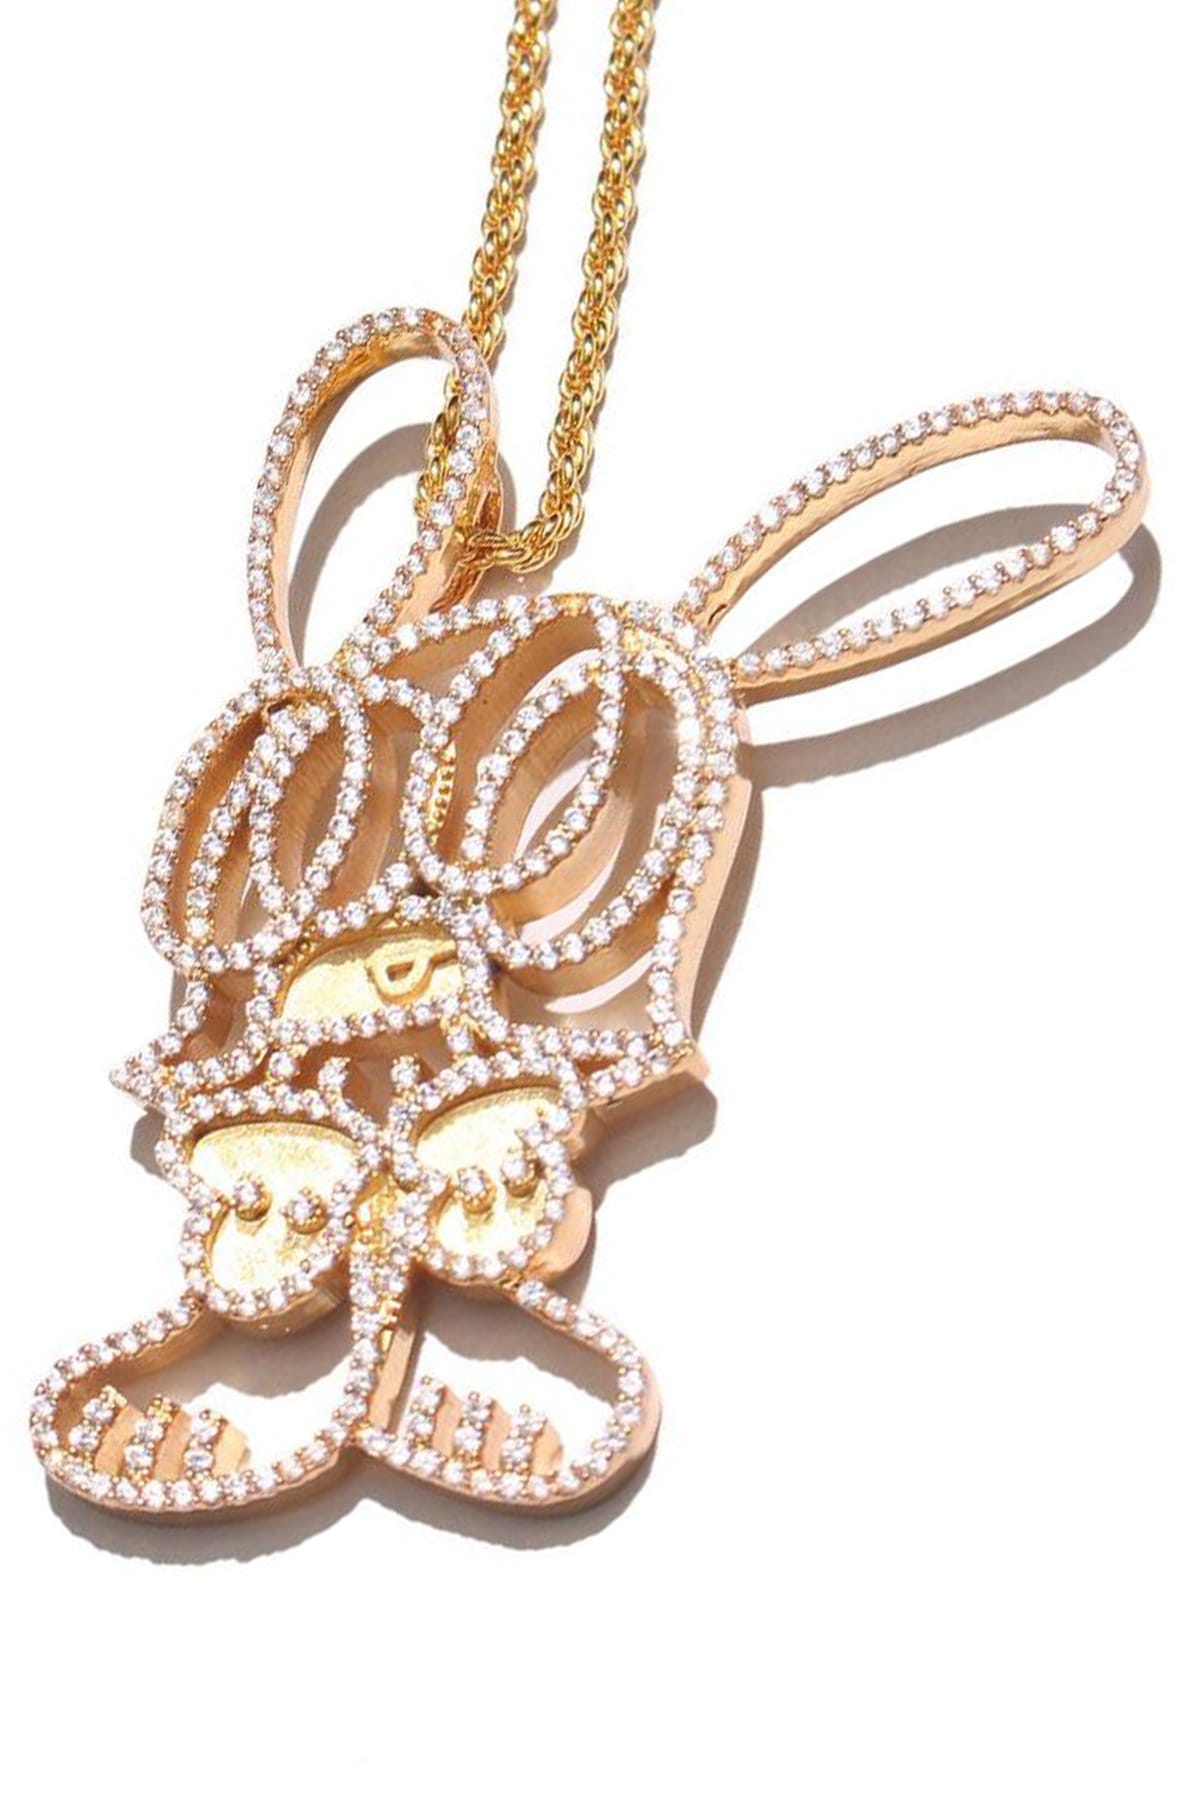 SKOLOCT x GHOST Jewelry Rabbit Necklace | Hypebeast